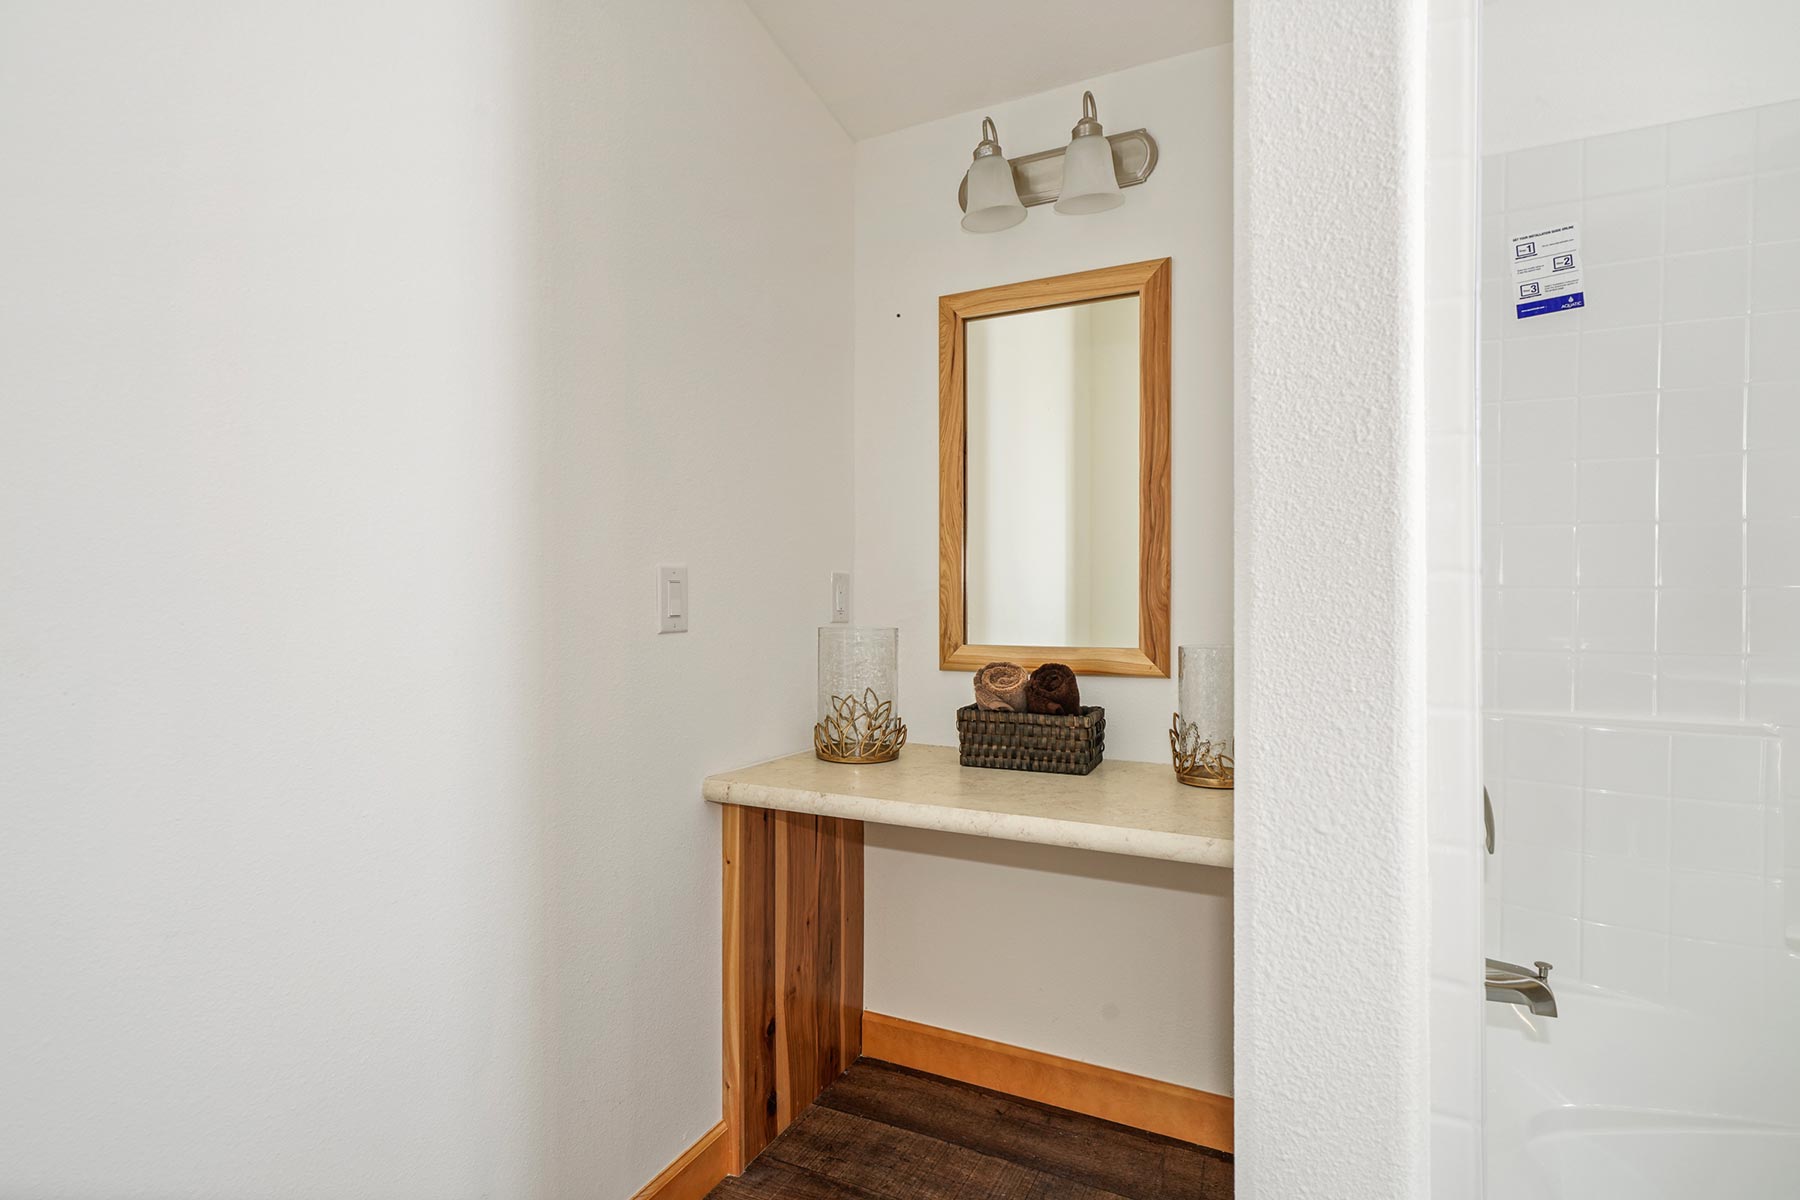 Skyline Homes Westridge 1218CT Manufactured Home Primary bathroom featuring single vanity